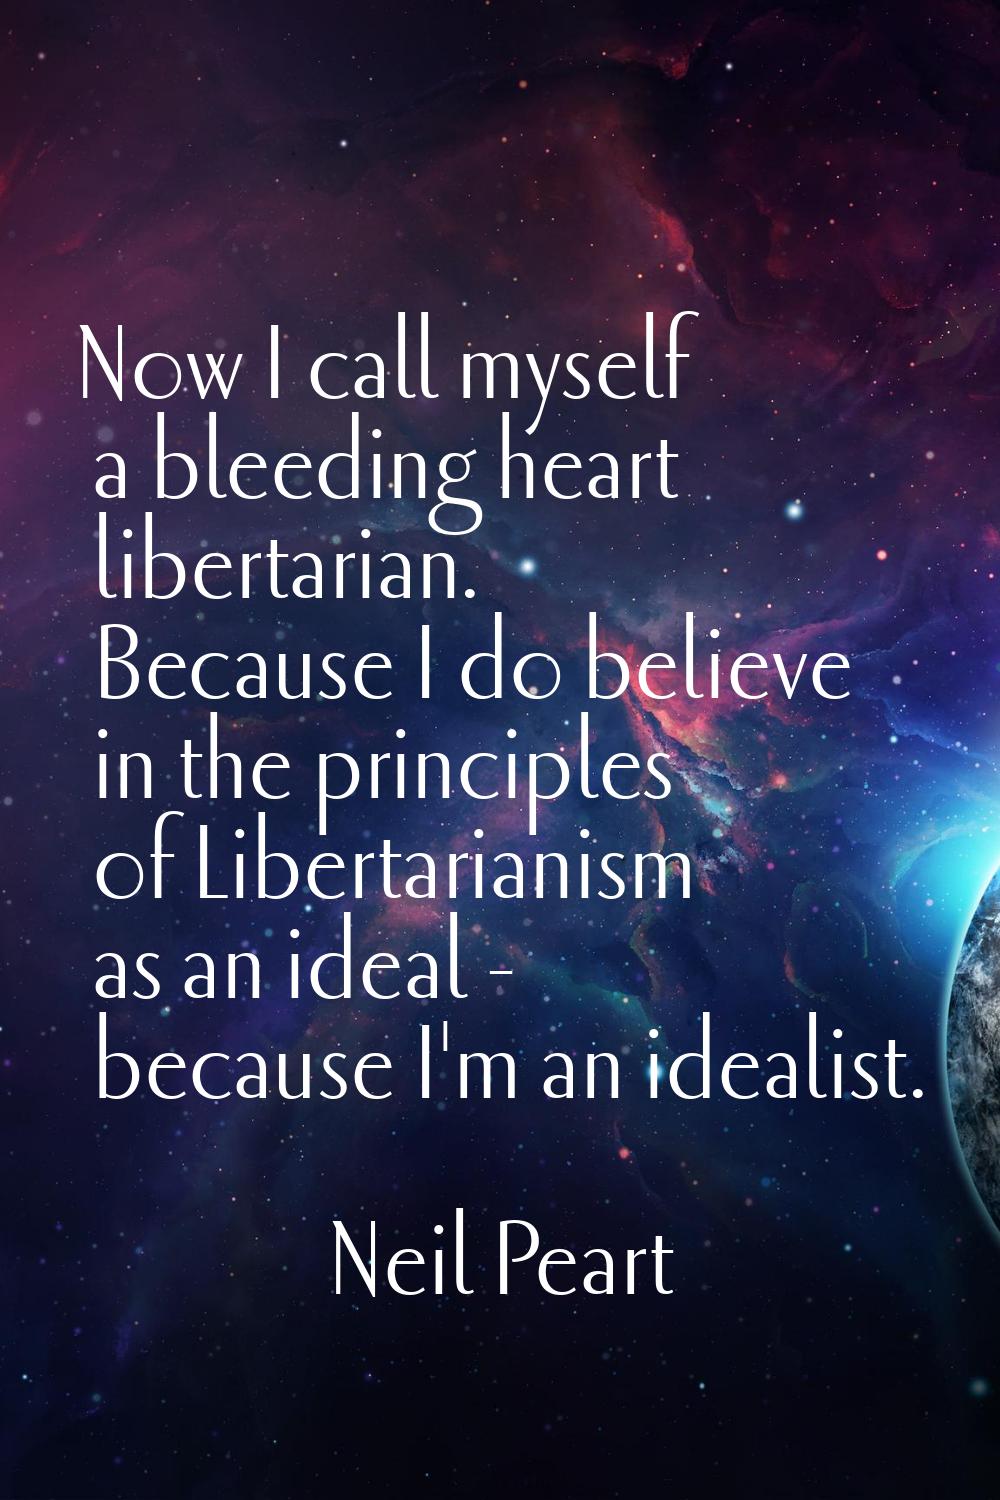 Now I call myself a bleeding heart libertarian. Because I do believe in the principles of Libertari